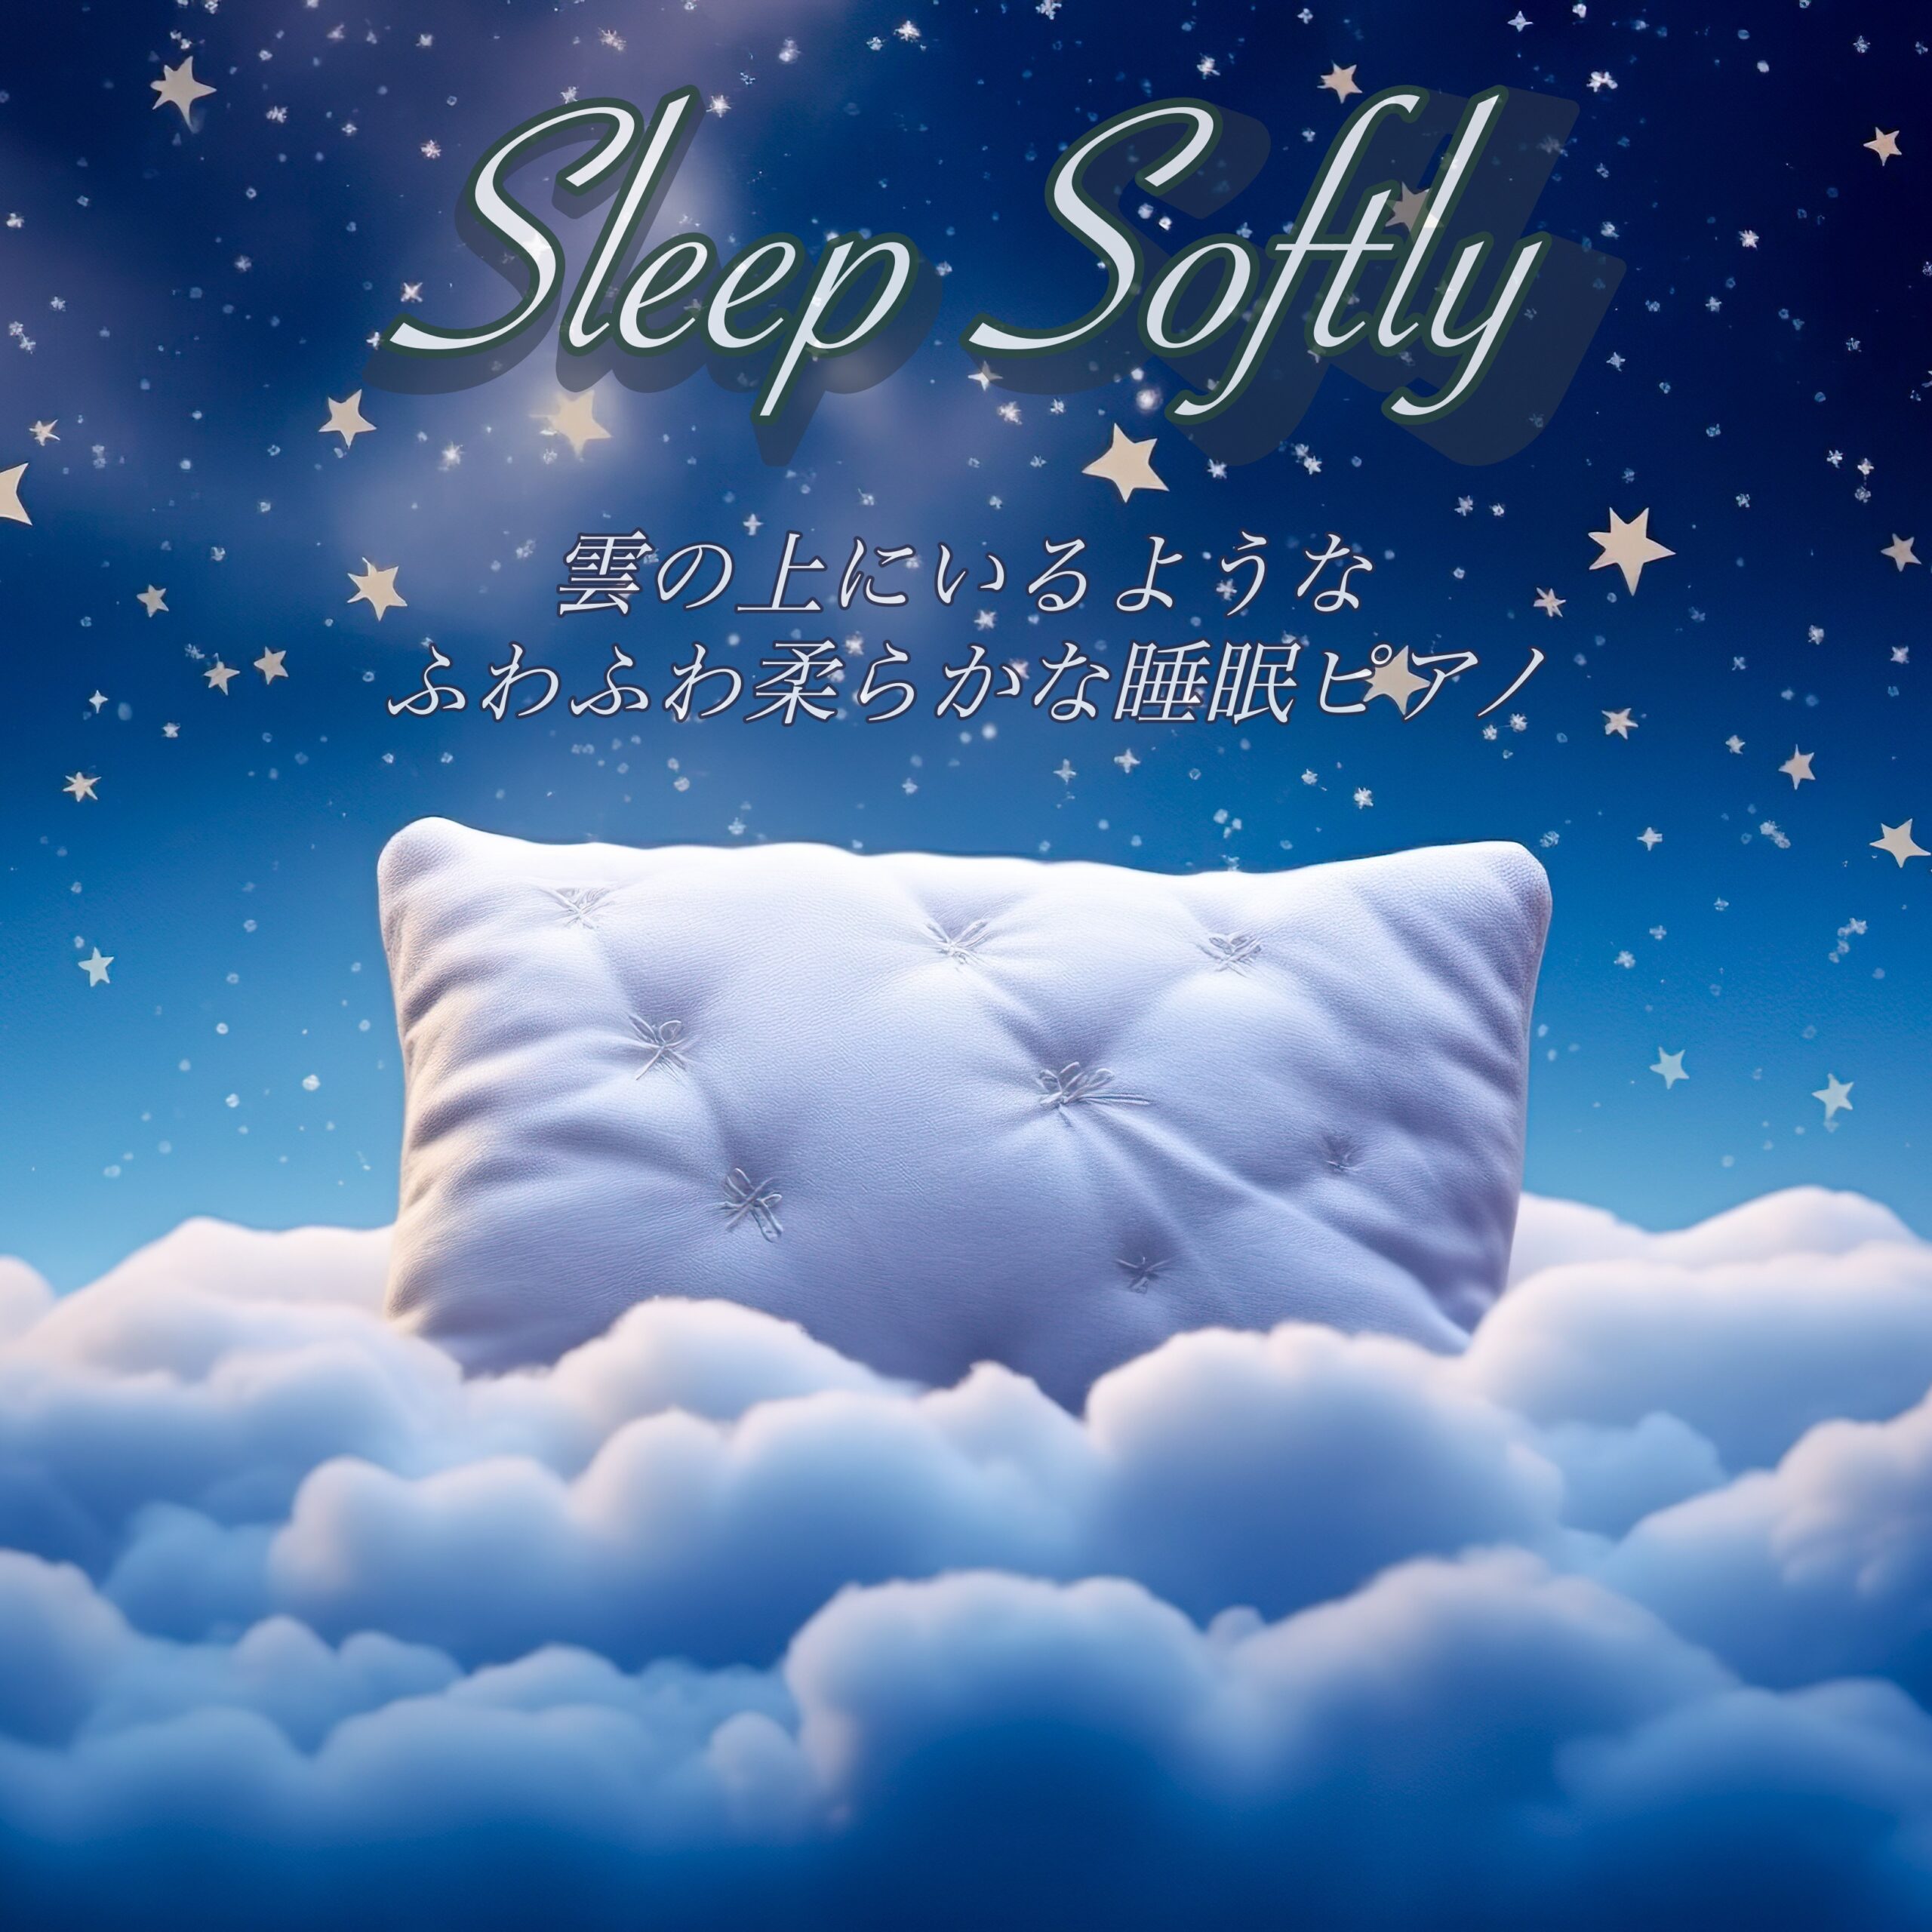 Sleep Softly 雲の上にいるようなふわふわ柔らかな睡眠ピアノ 睡眠瞑想用リラックスピアノアルバム